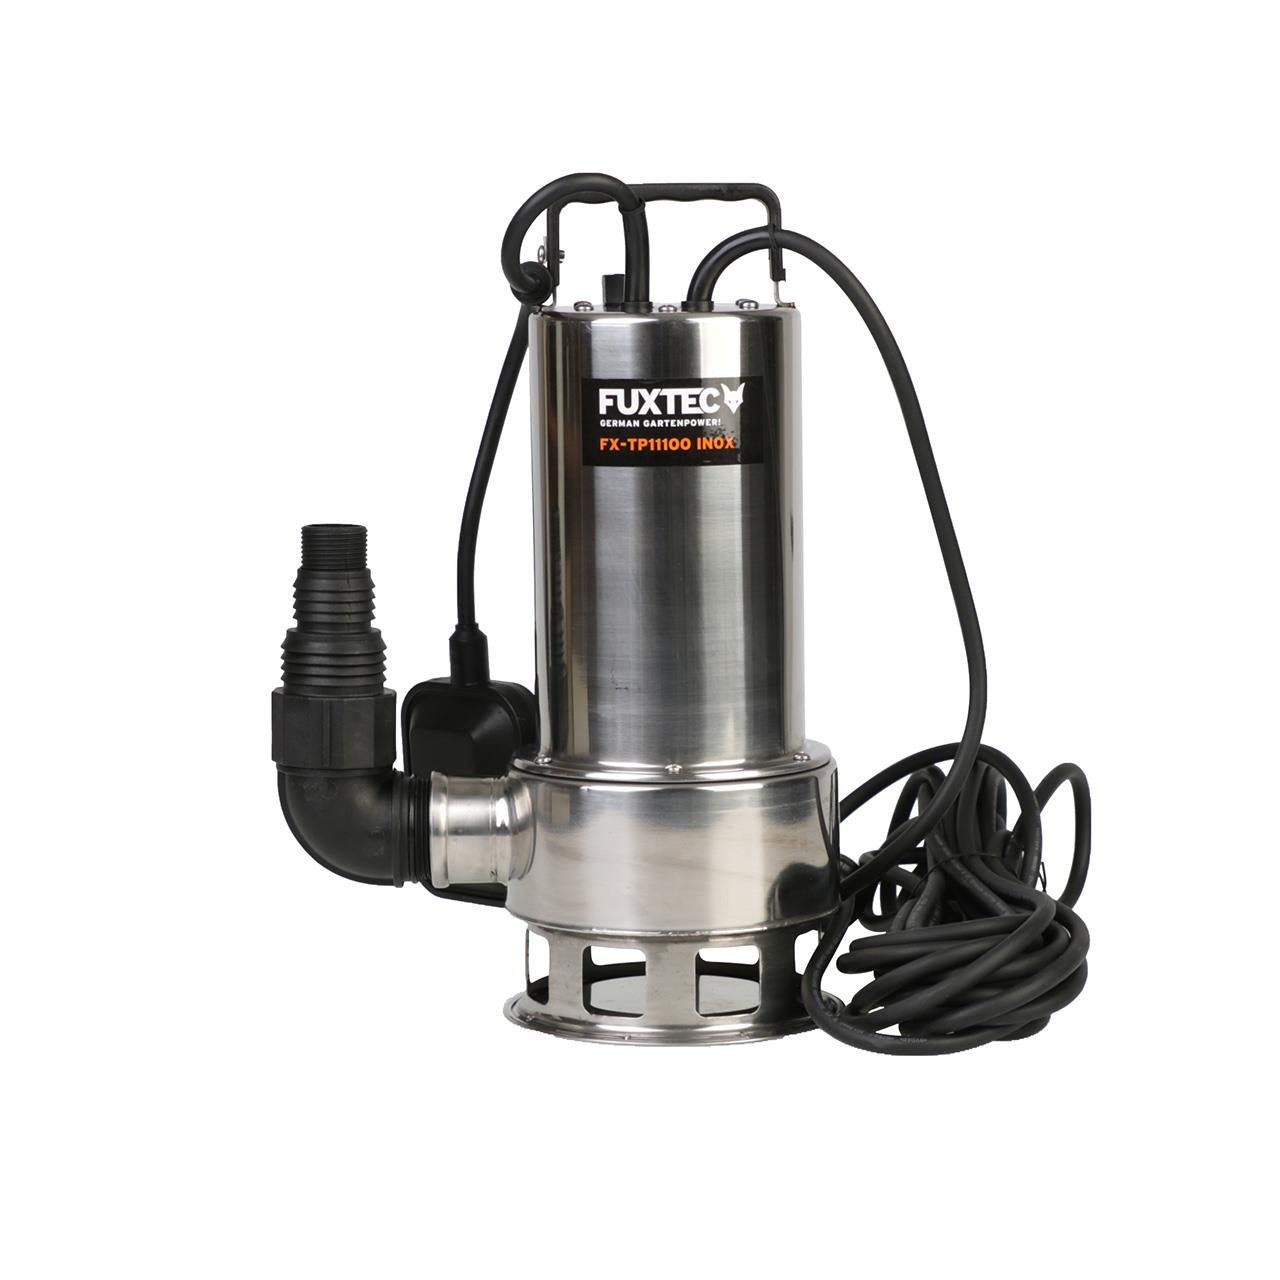 B-Ware FUXTEC Tauchpumpe - Schmutzwasserpumpe FX-TP11000 INOX (Edelstahl) - 1100 Watt